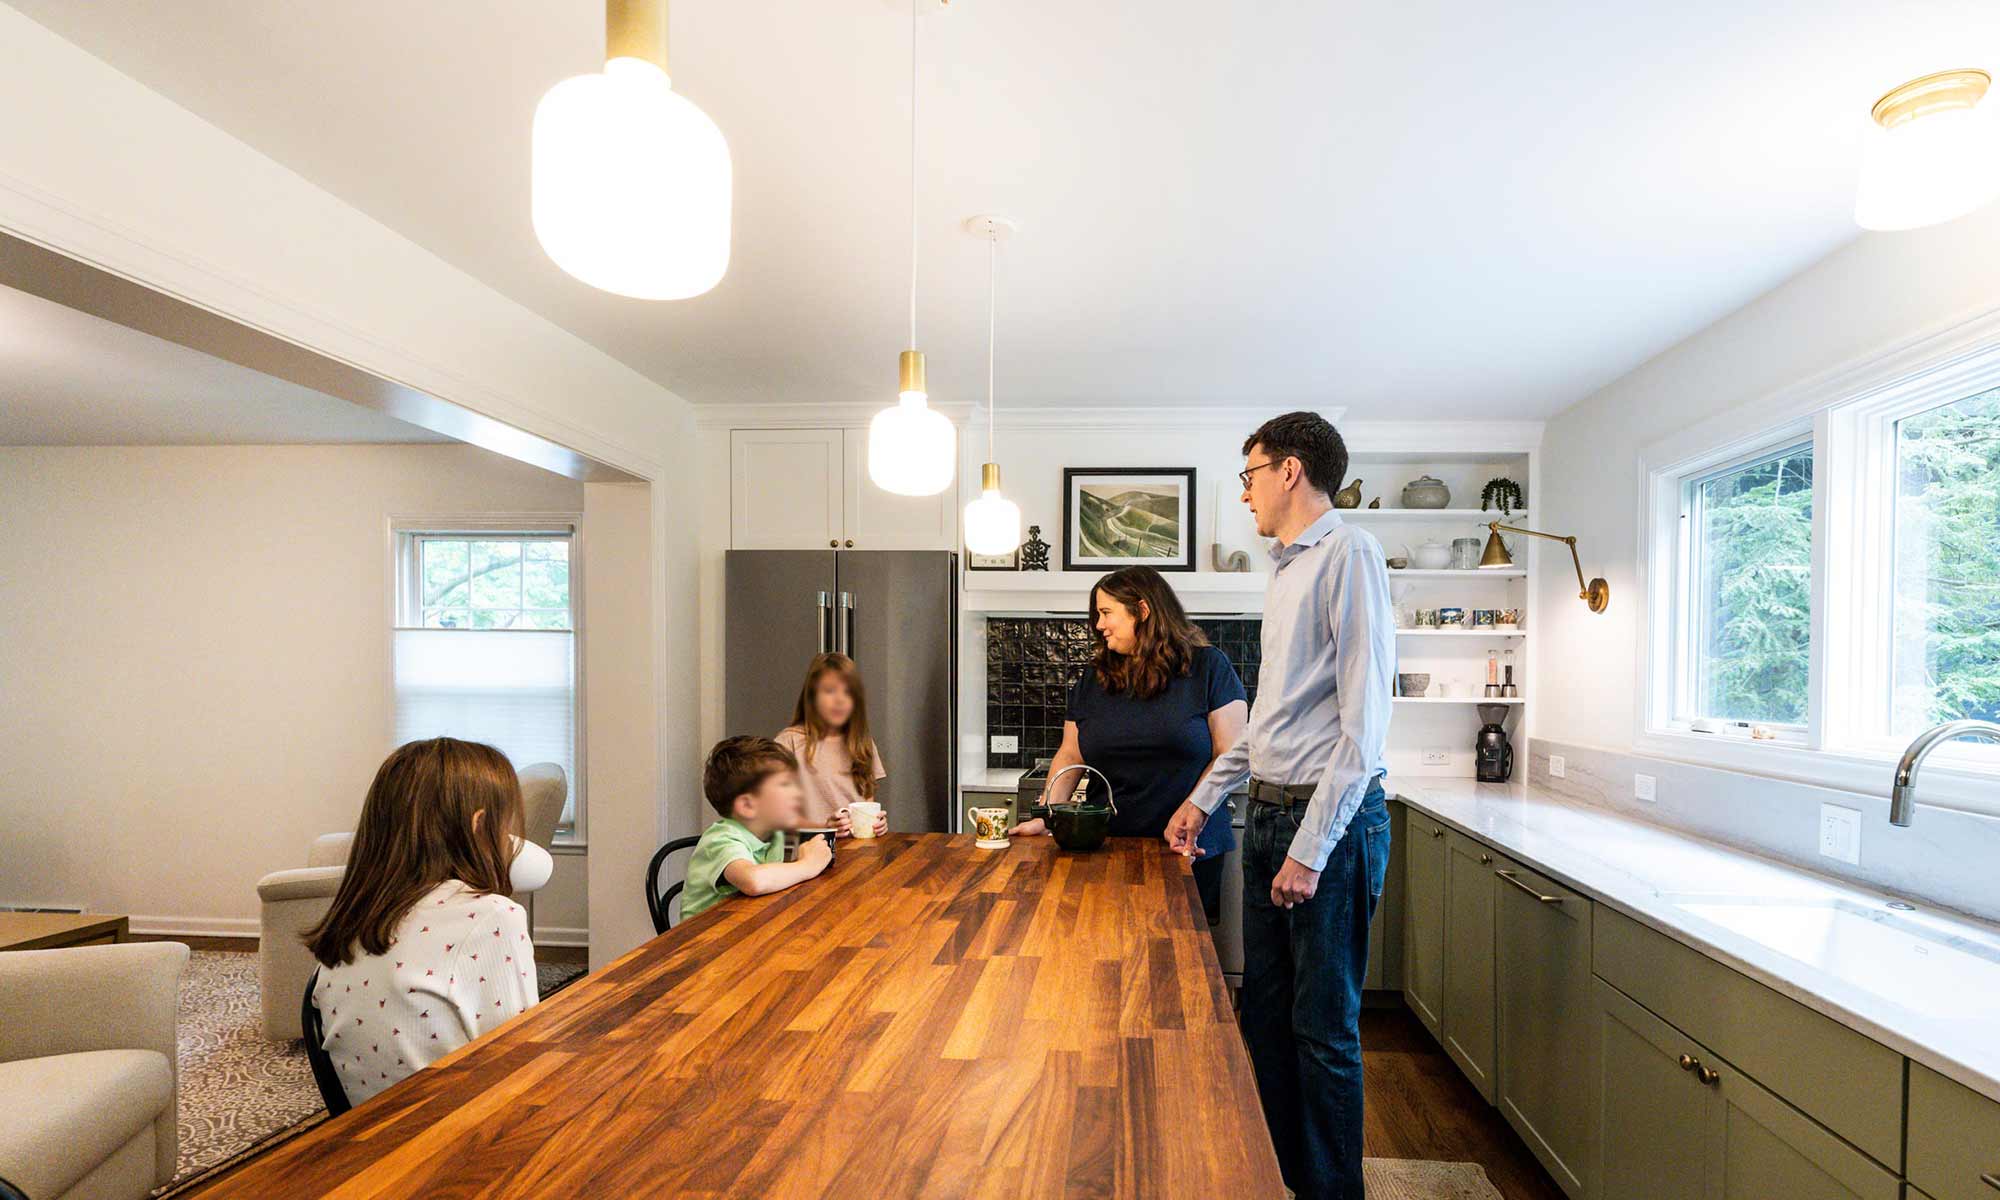 Family of five gathered around butcher block kitchen island in luxury kitchen remodel